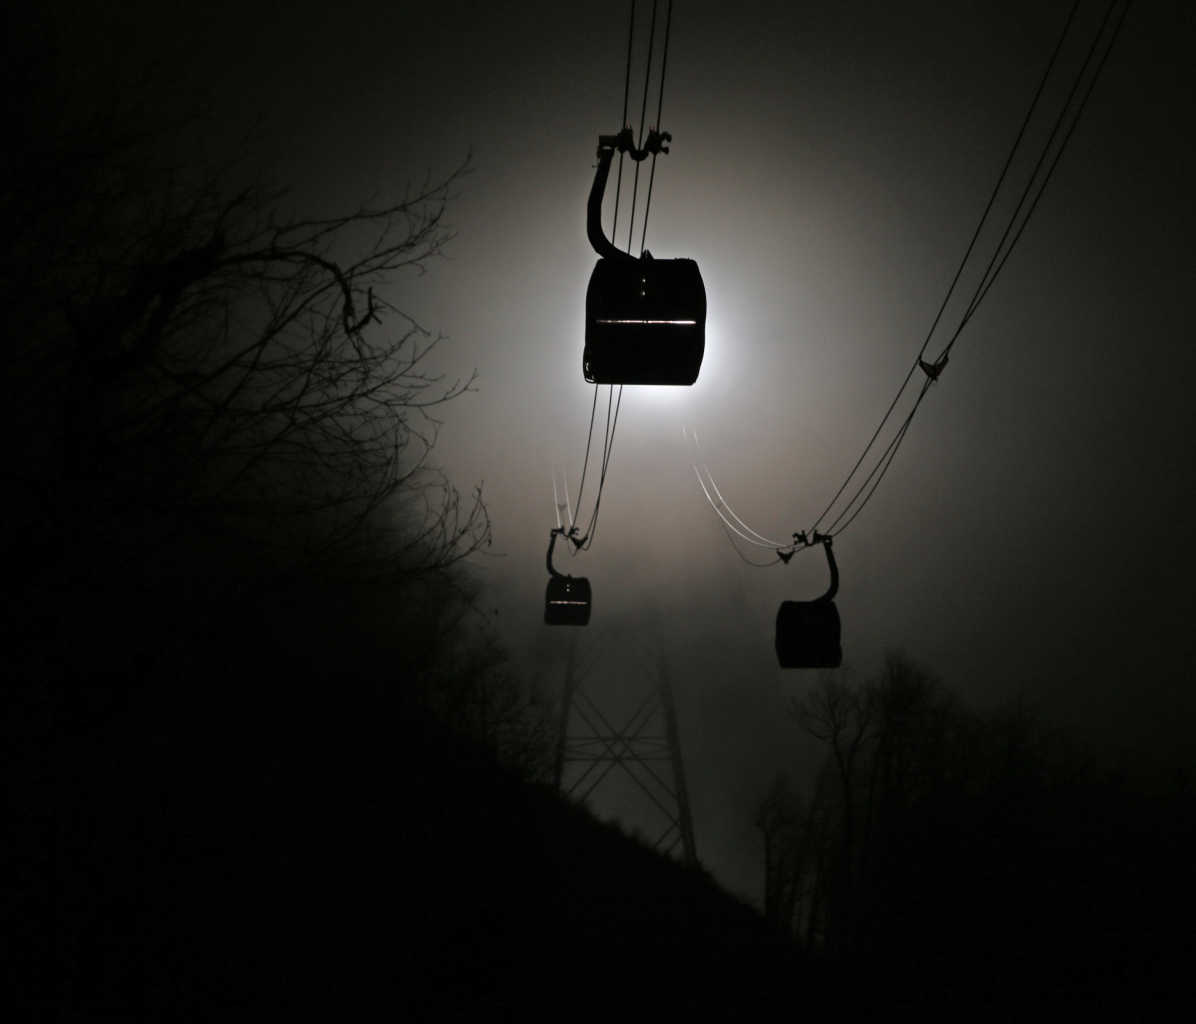 Gondolas are shrouded in fog as they travel between biathlon фото (photo)